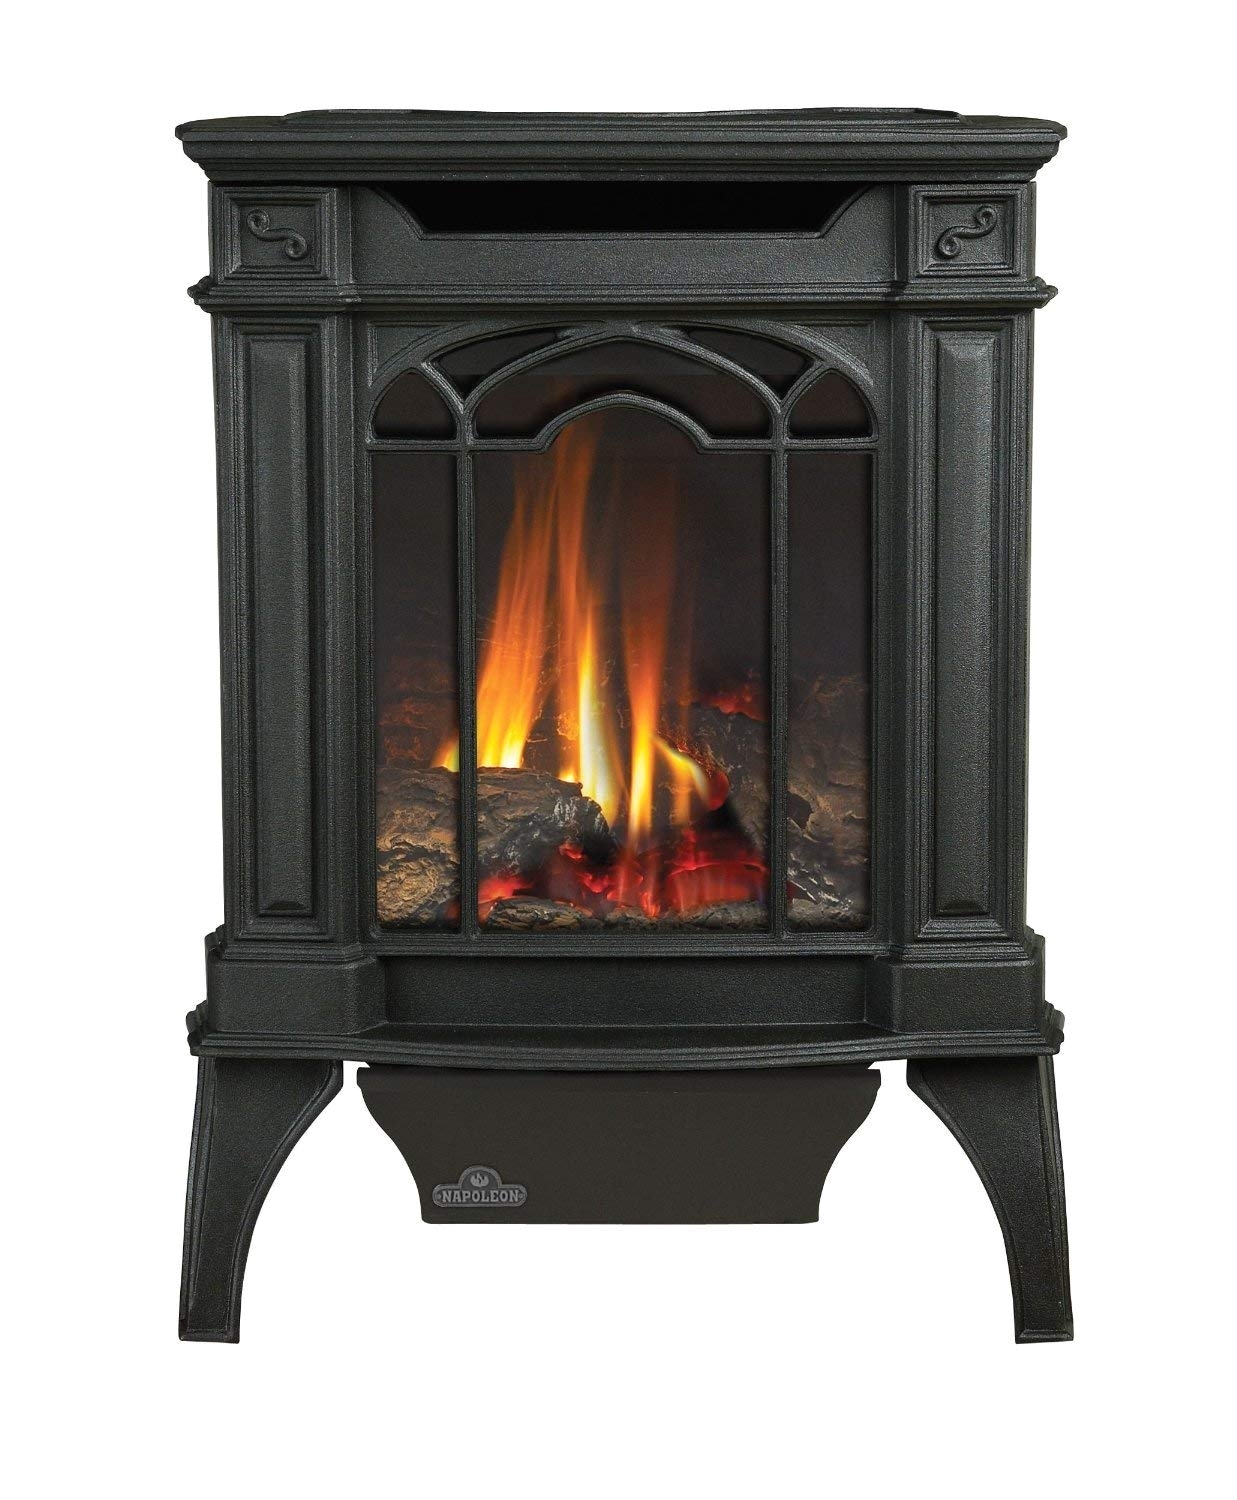 amazon com arlington direct vent cast iron gas stove color black fuel type natural gas sports outdoors